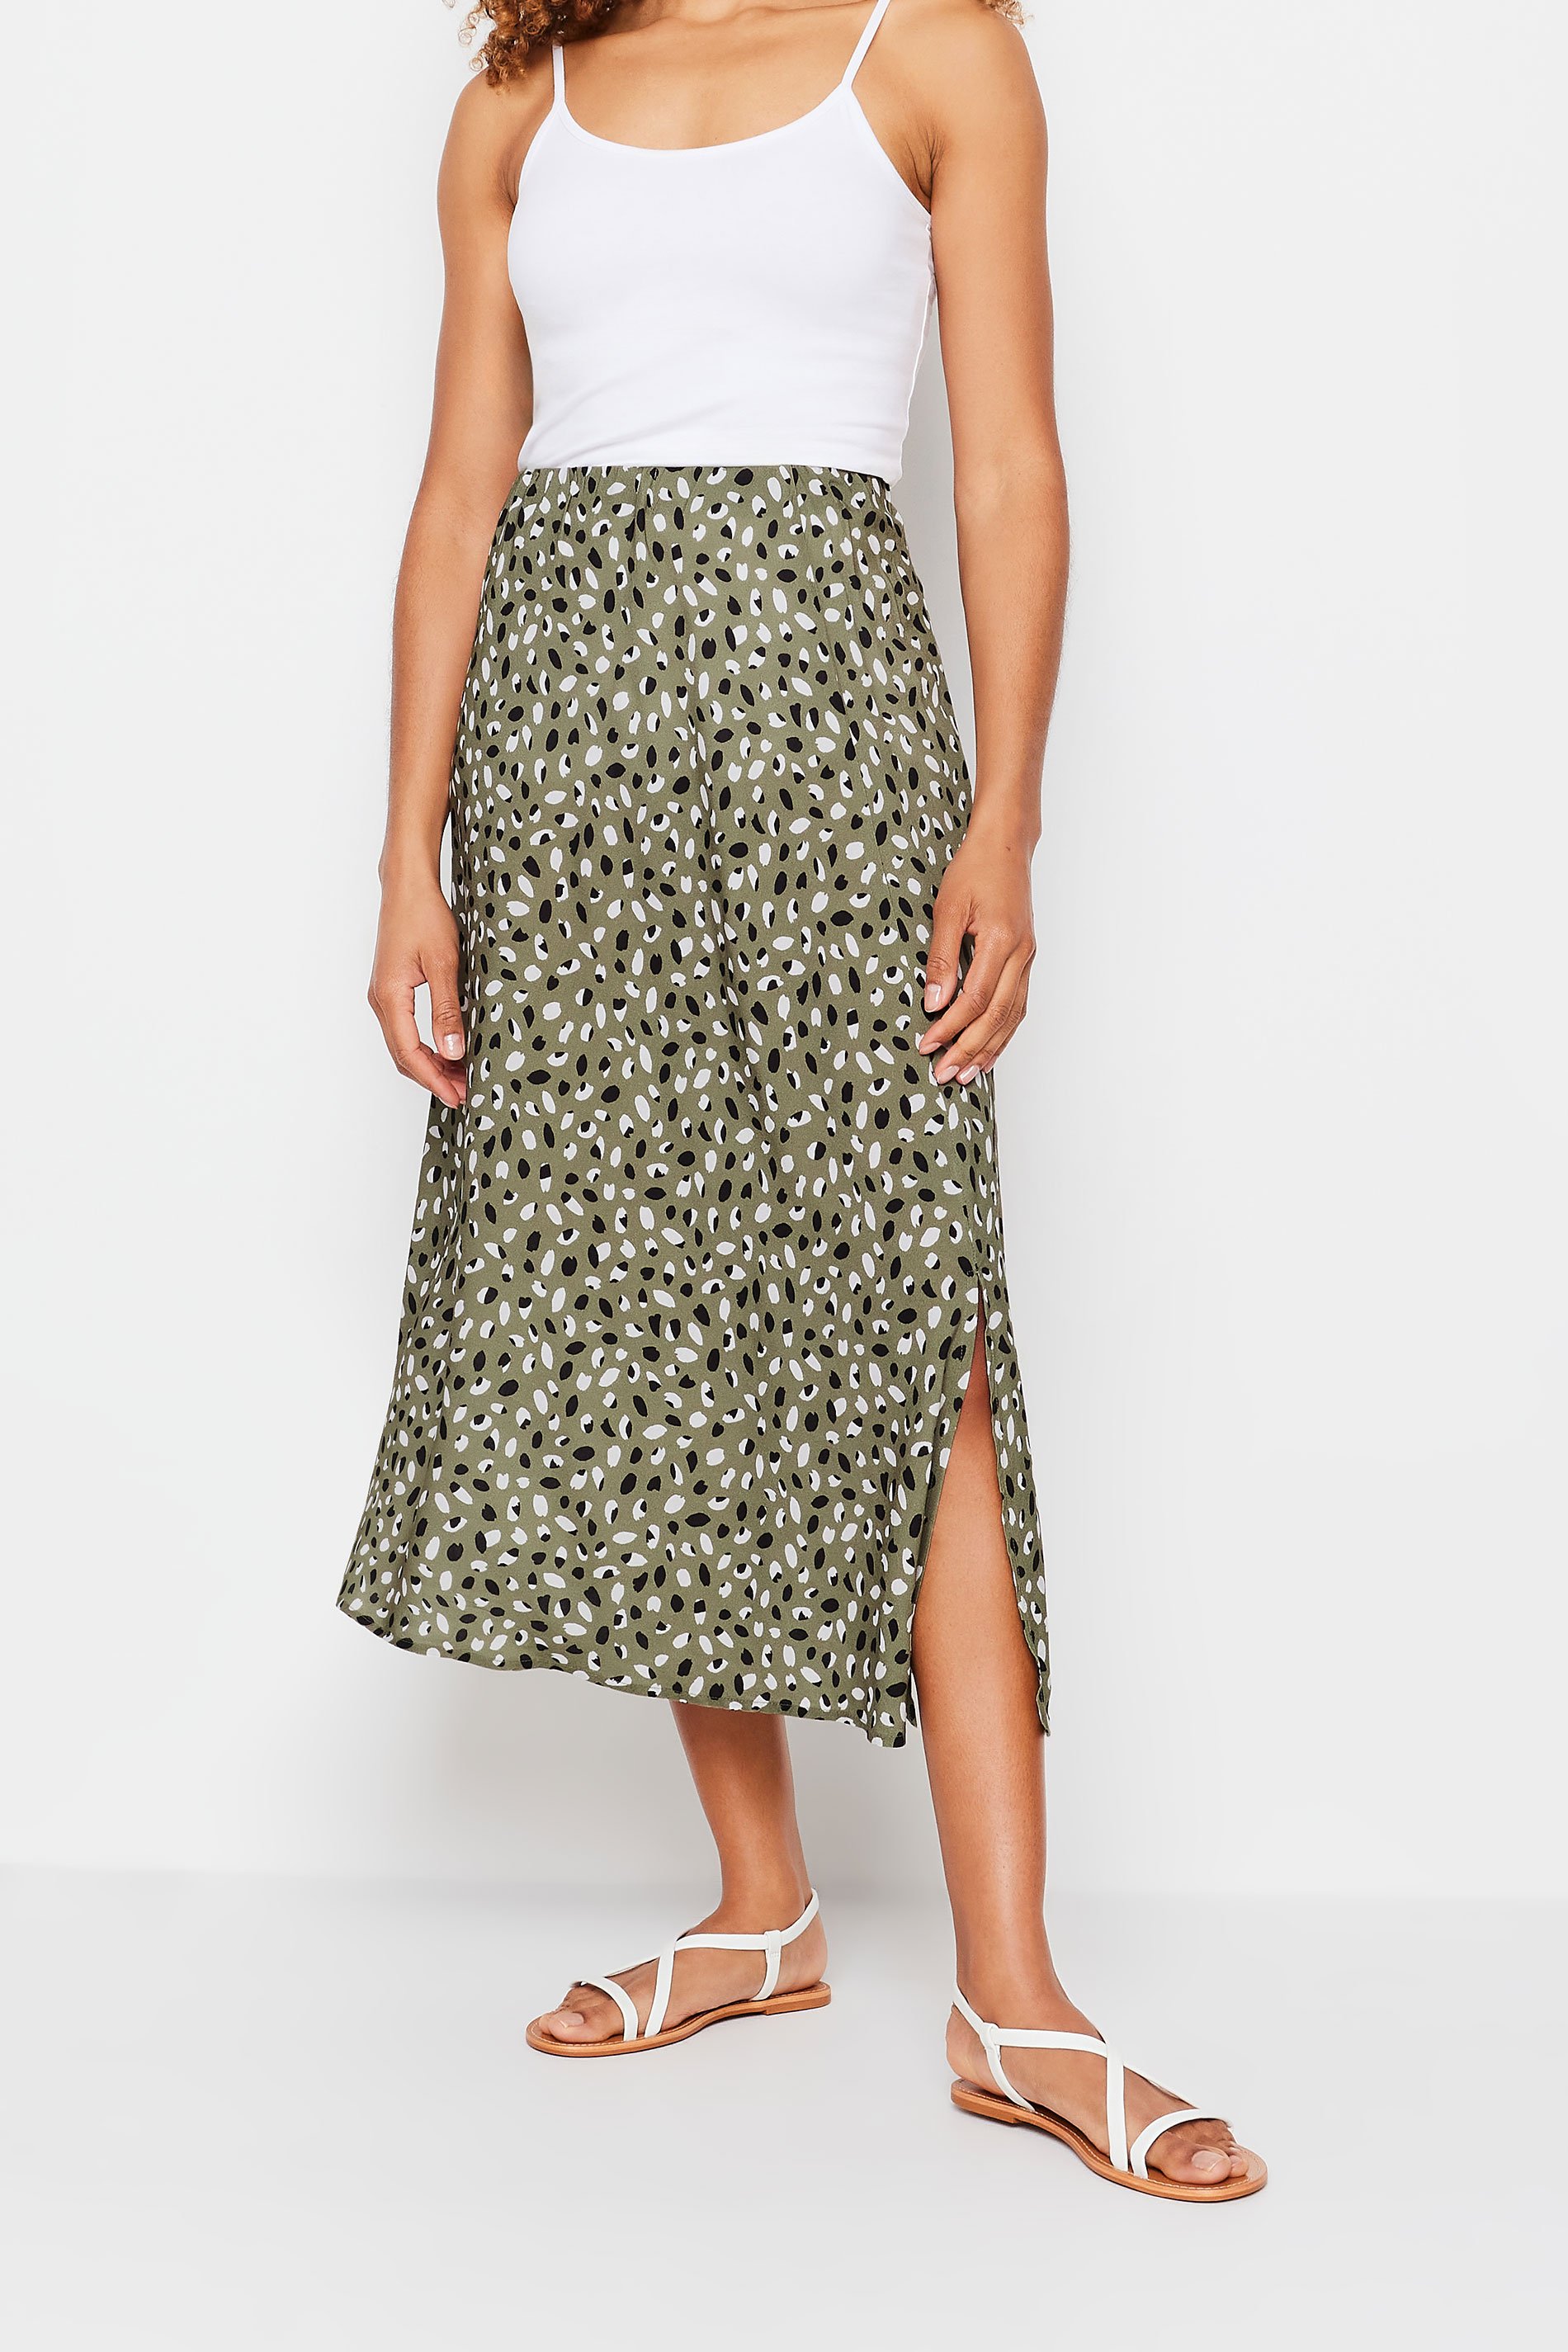 M&Co Khahi Green Spot Print Midaxi Skirt | M&Co 1